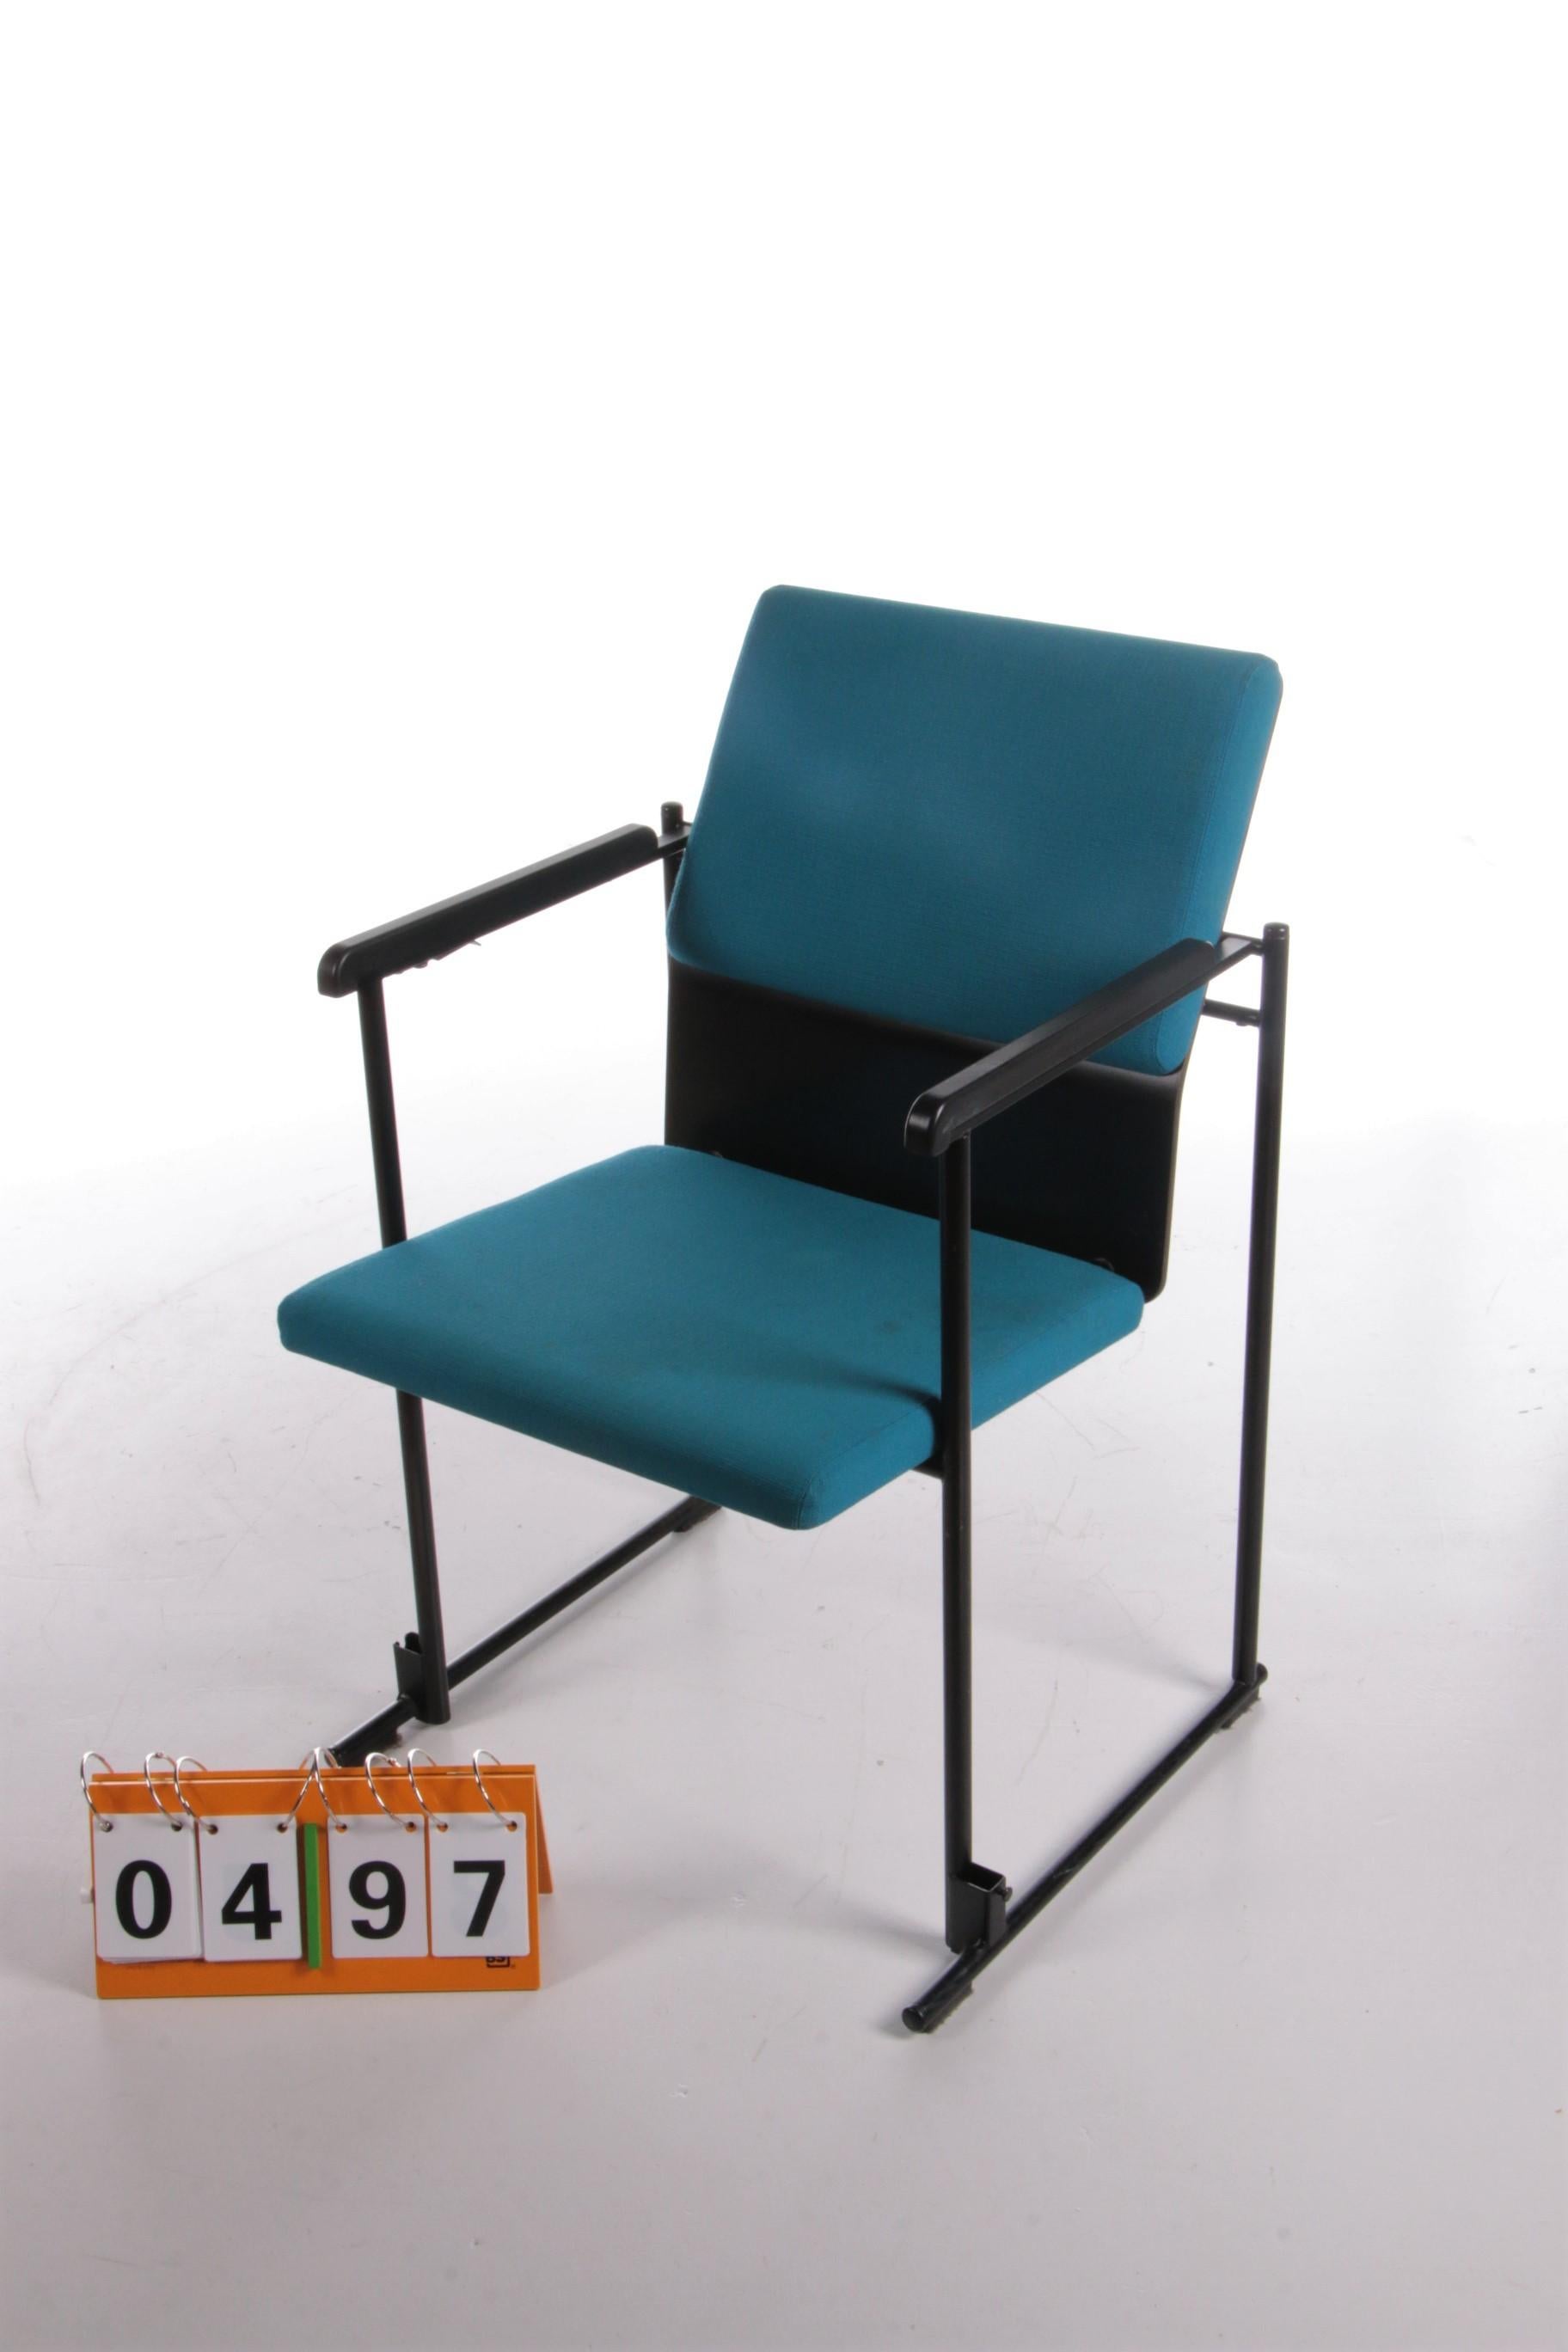 Mid-Century Modern Yrjö Kukkapuro Fabric Dining Chair Made by Avarte, Finland 1970 For Sale